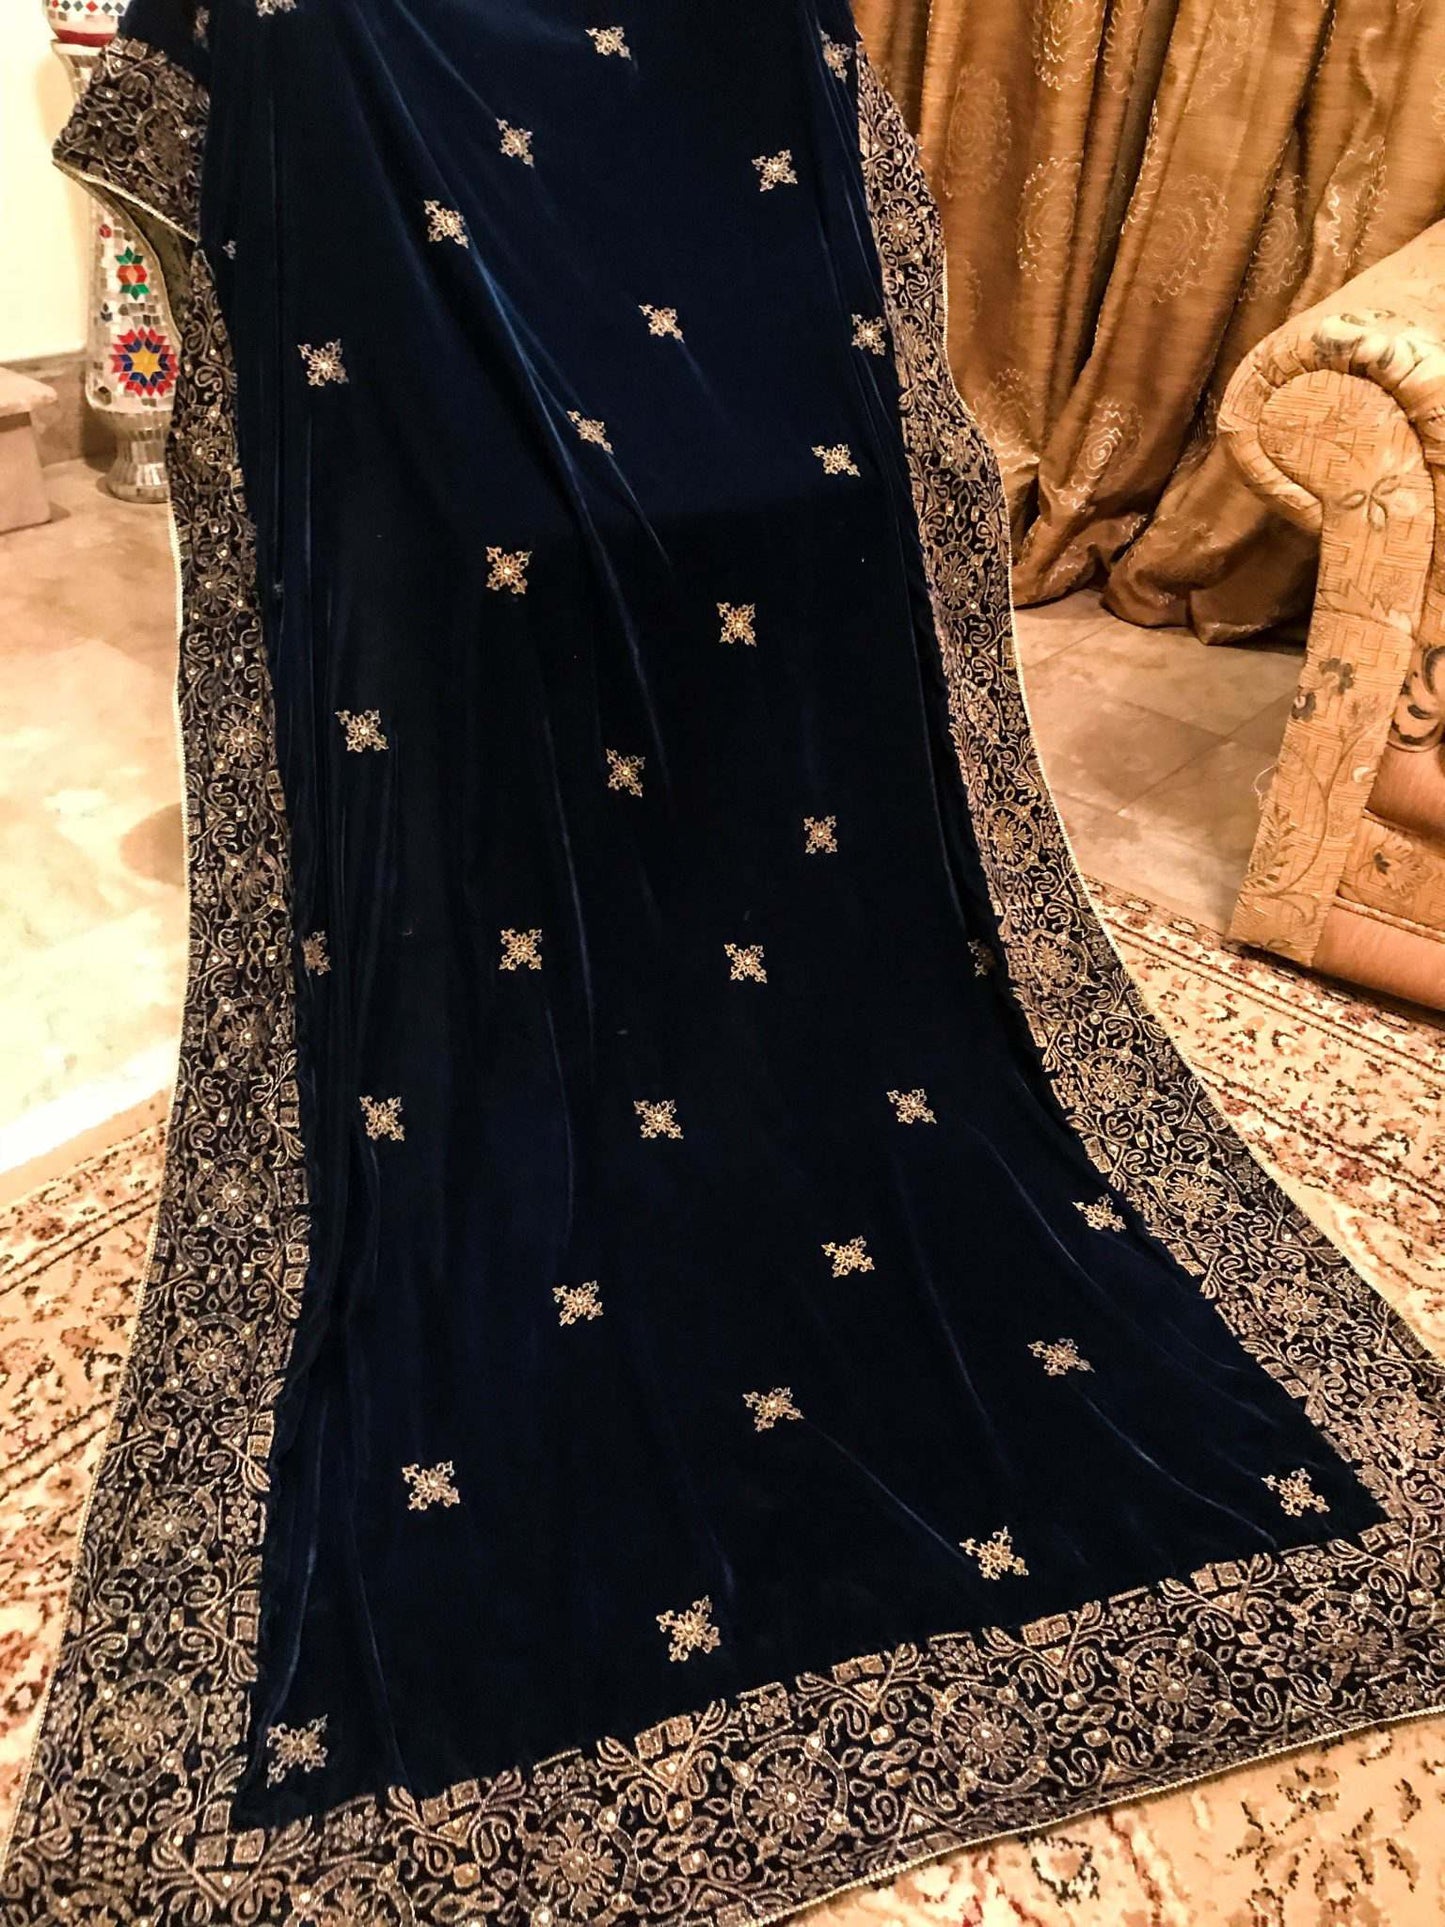 VT-14 Dark Aqua Blue shawl with tila outline, Banarsi border and stones on top